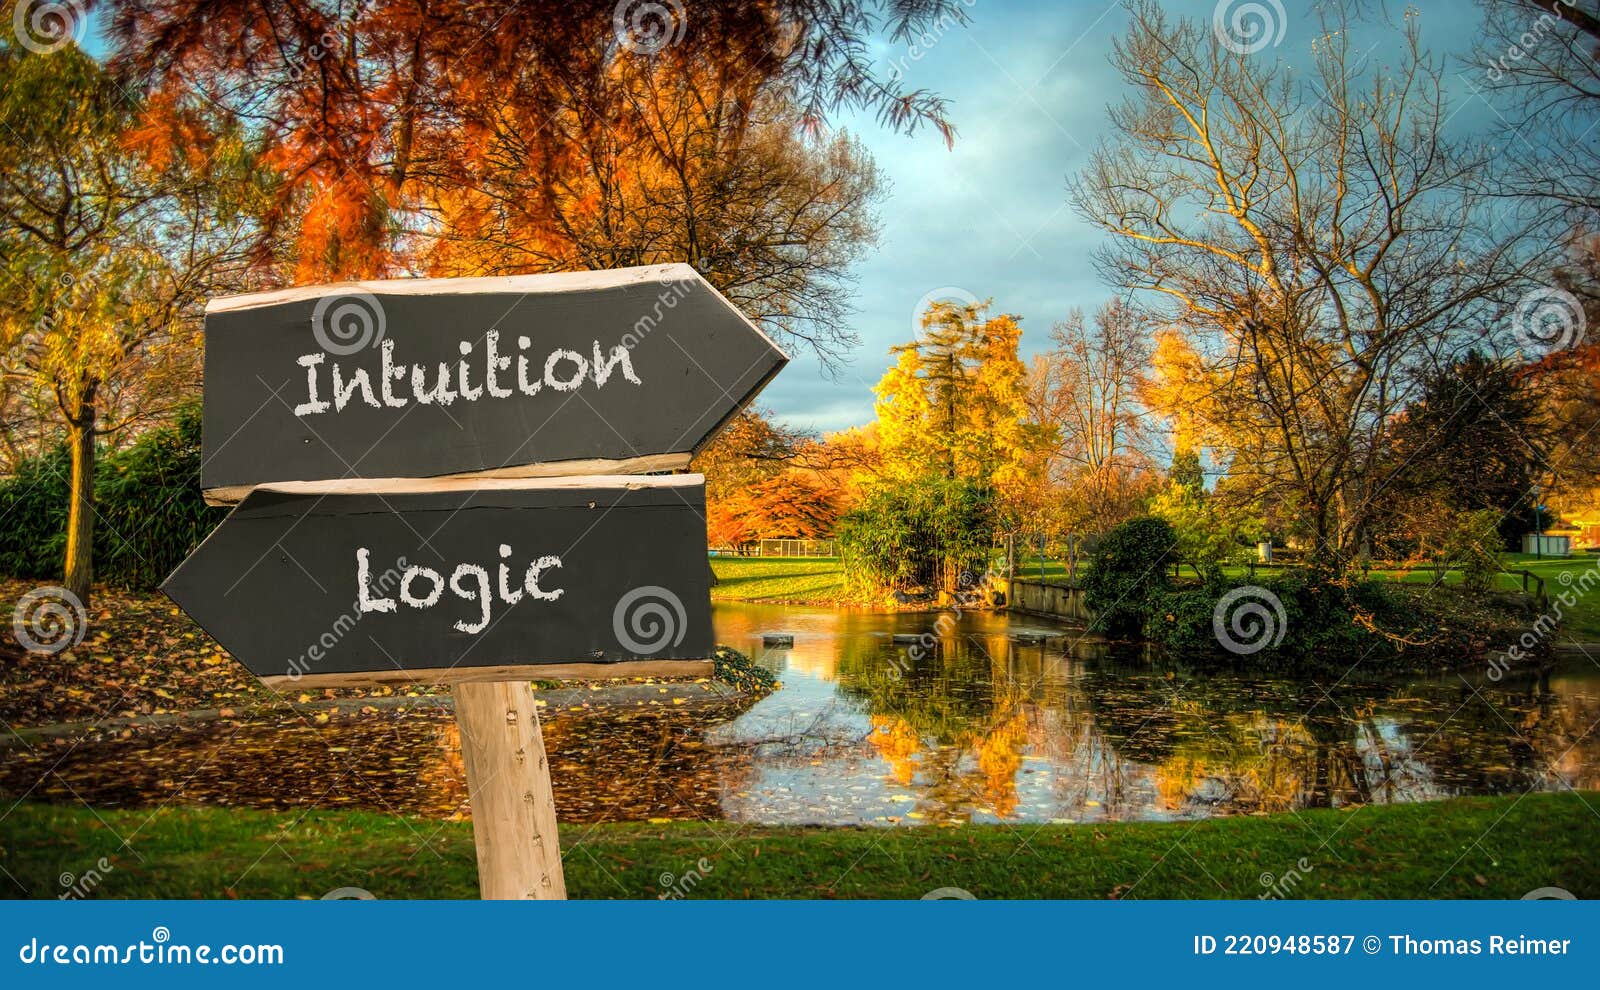 street sign intuition versus logic